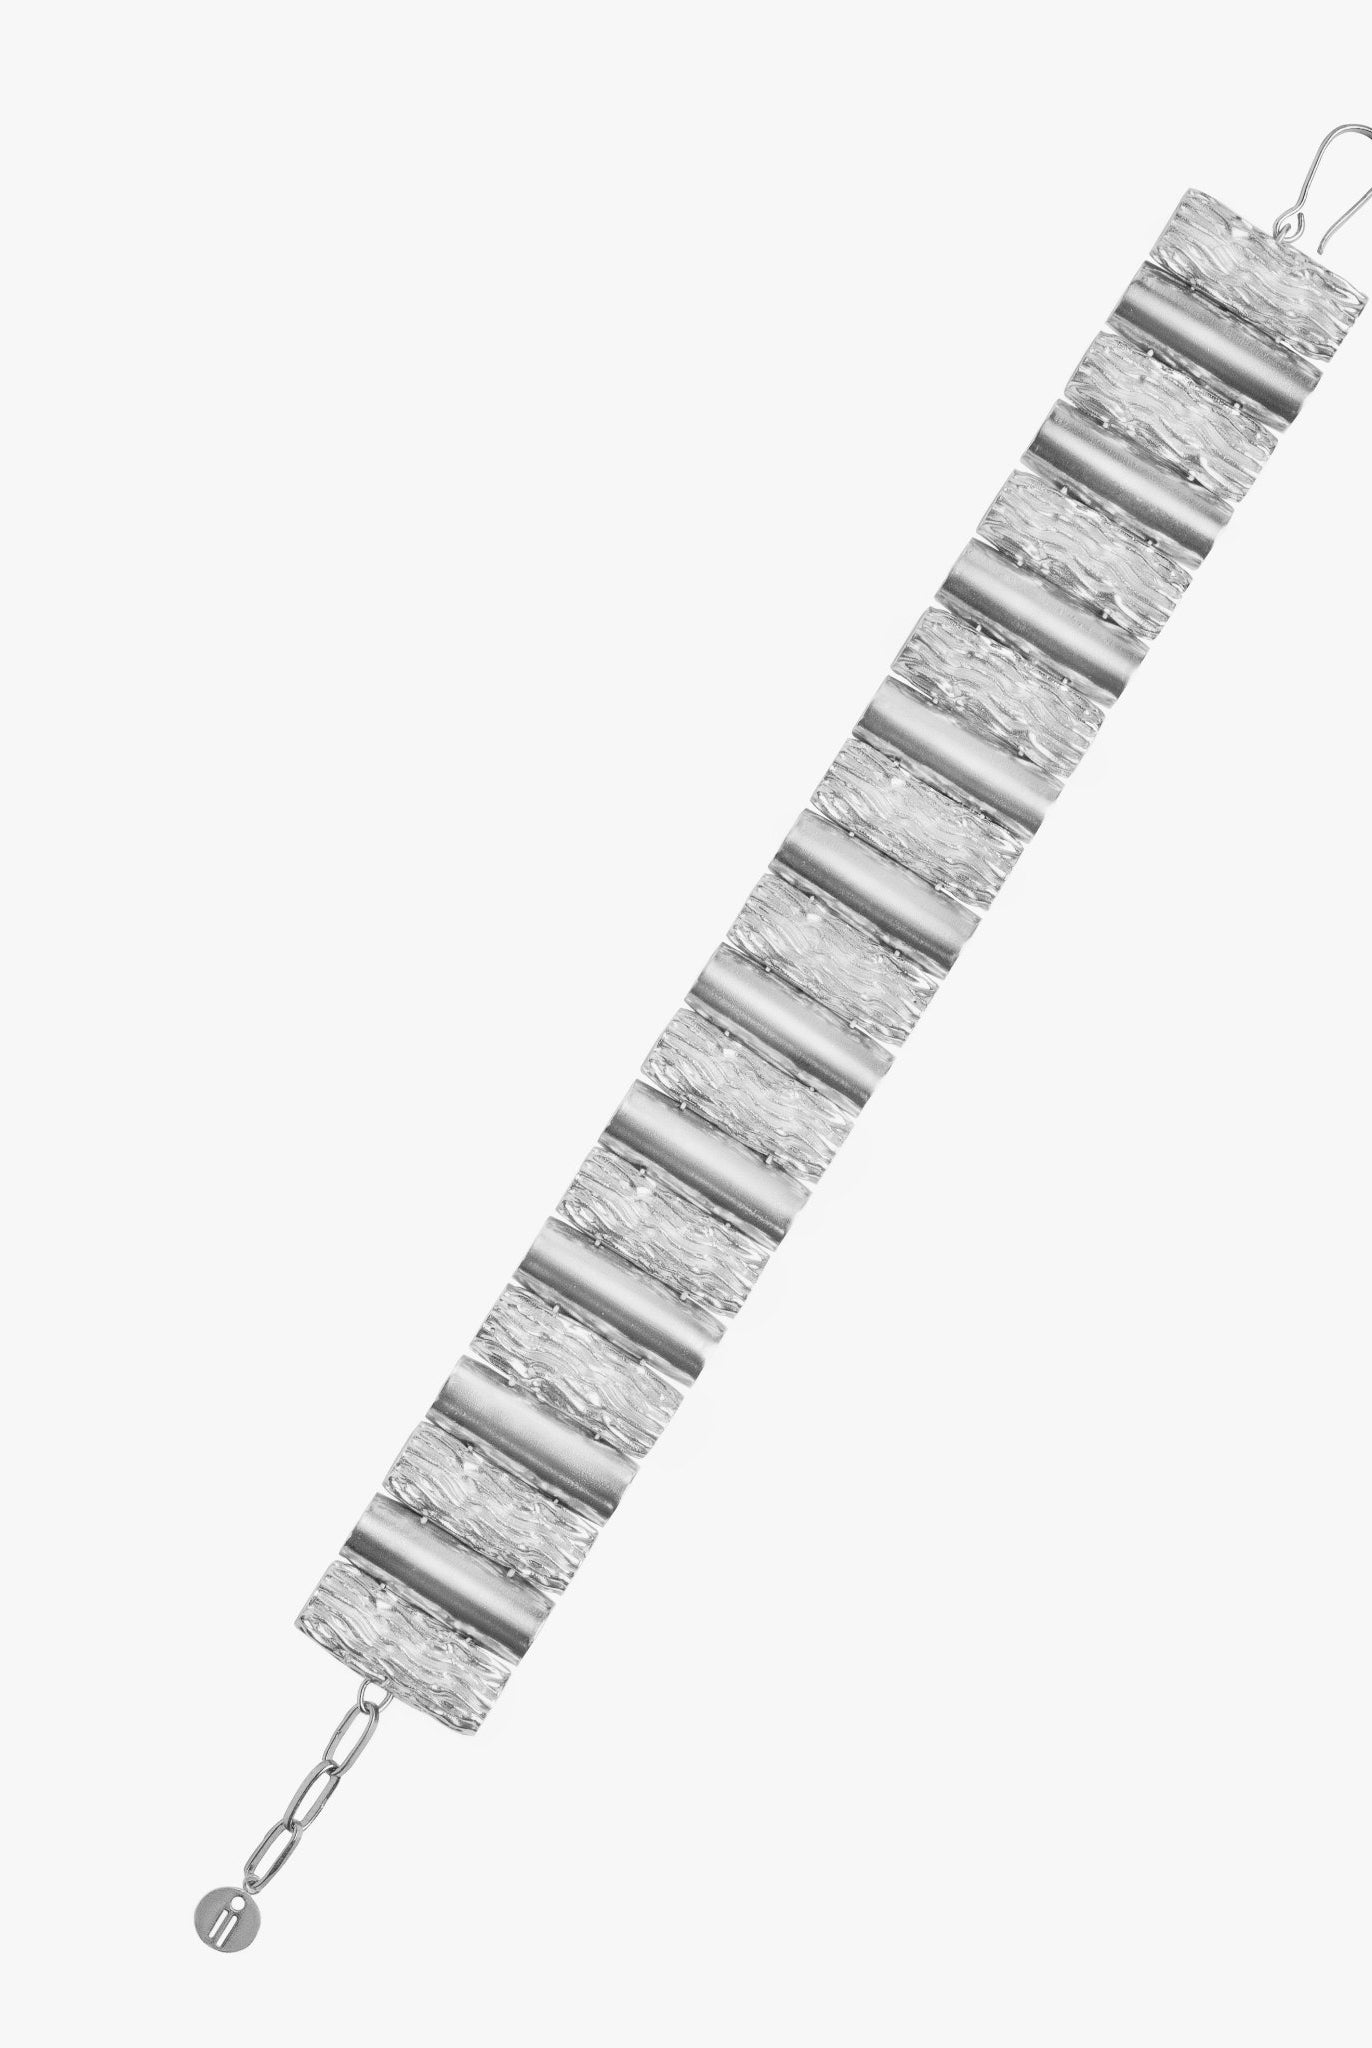 Binary Logs Necklace - Silver Tone - CiceroniNeckpieceEquiivalence